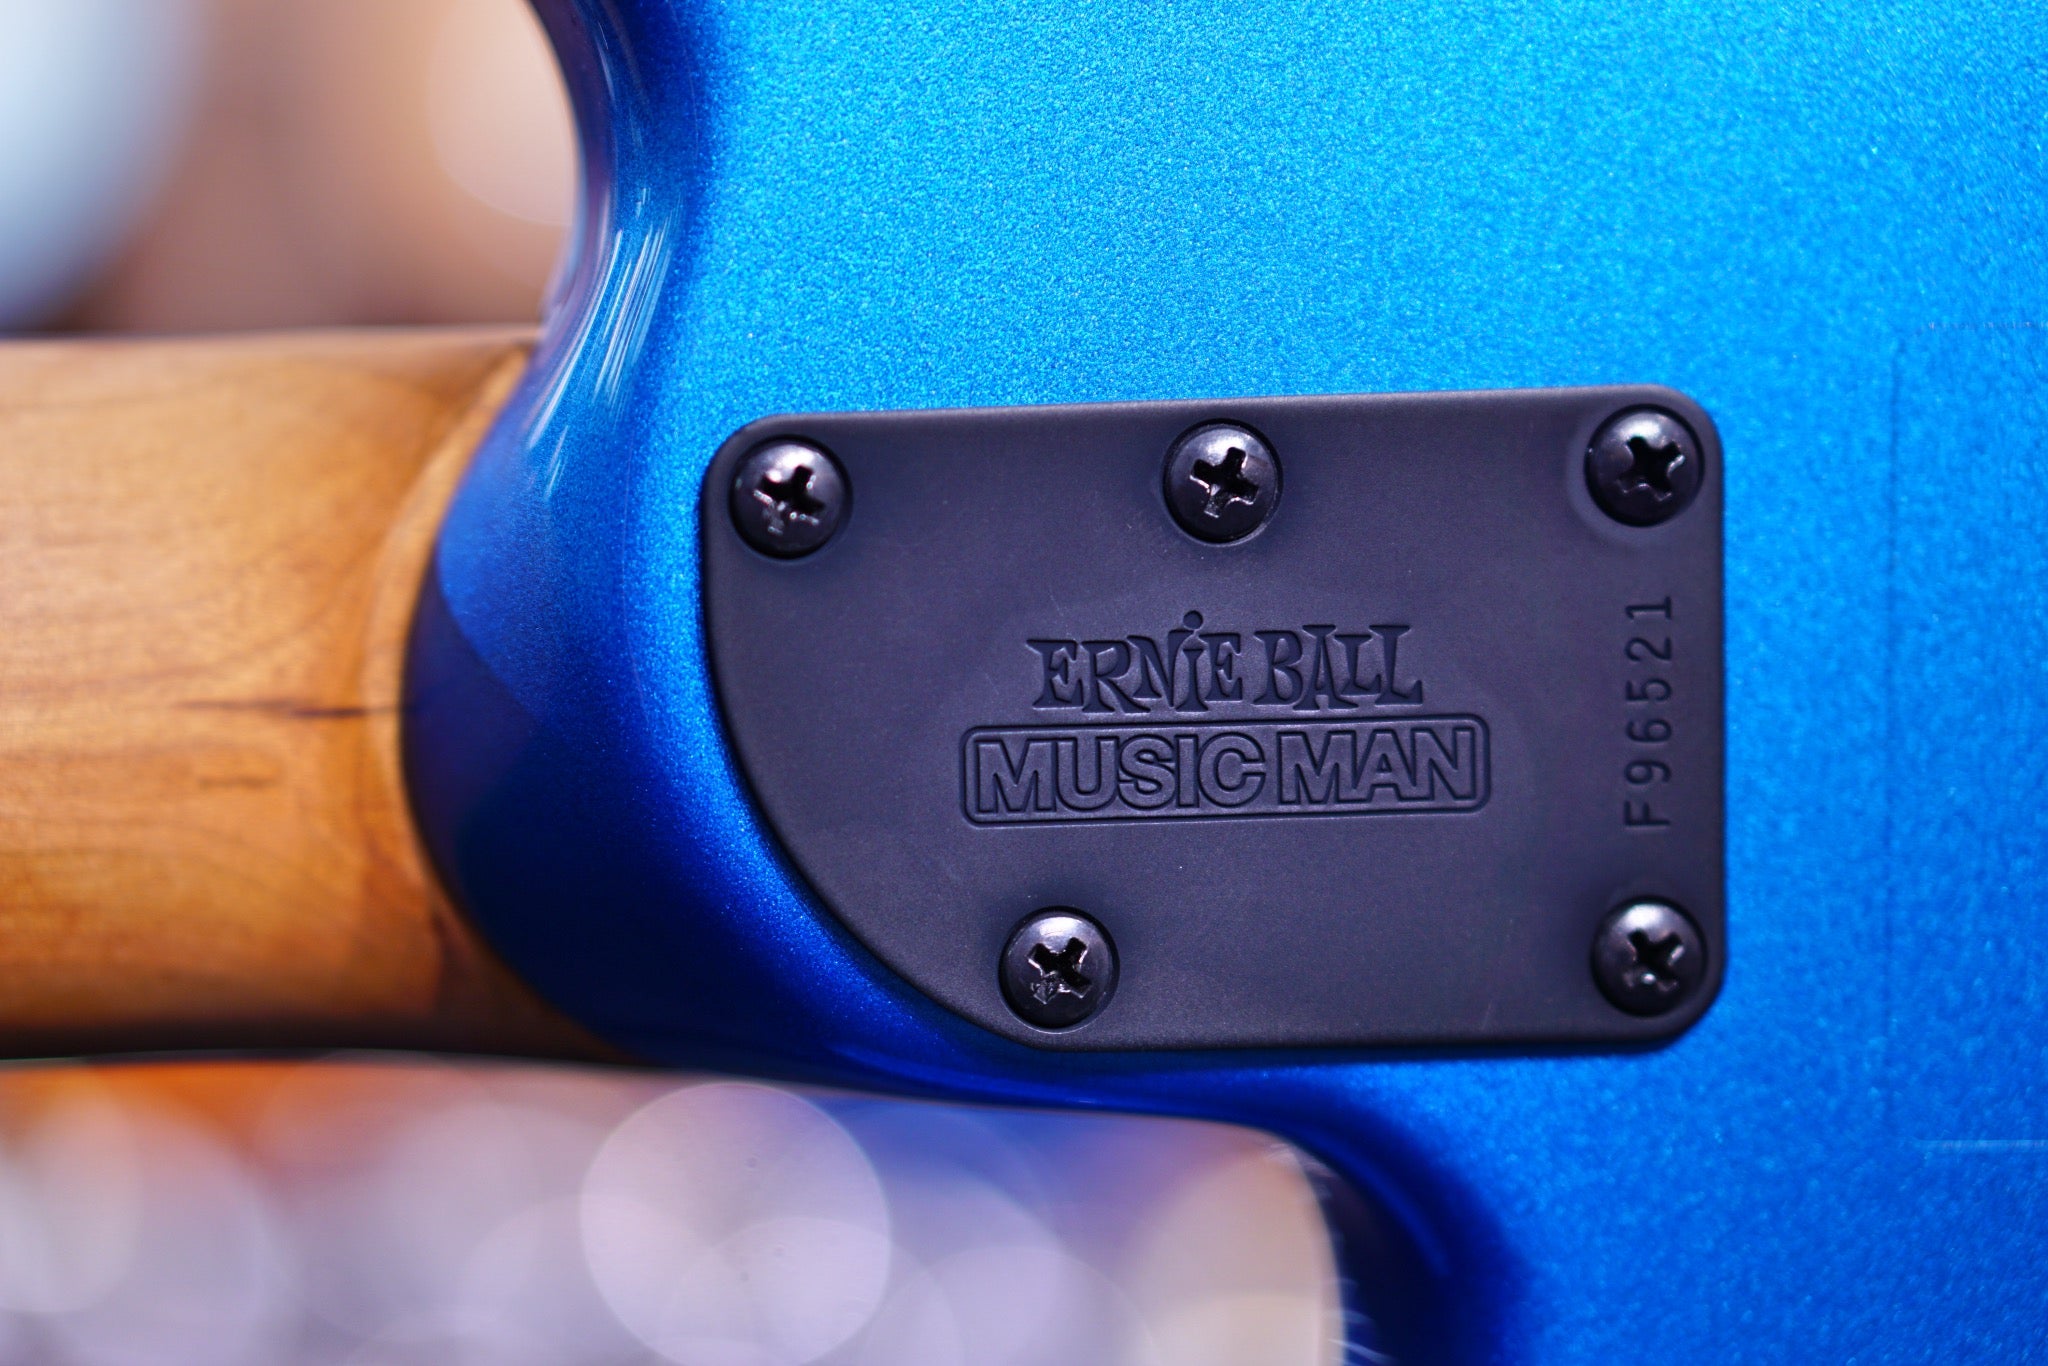 Ernie Ball Music Man StingRay Special 4 HH Bass Guitar - Speed Blue with Rosewood Fingerboard F96521 - HIENDGUITAR   Musicman bass